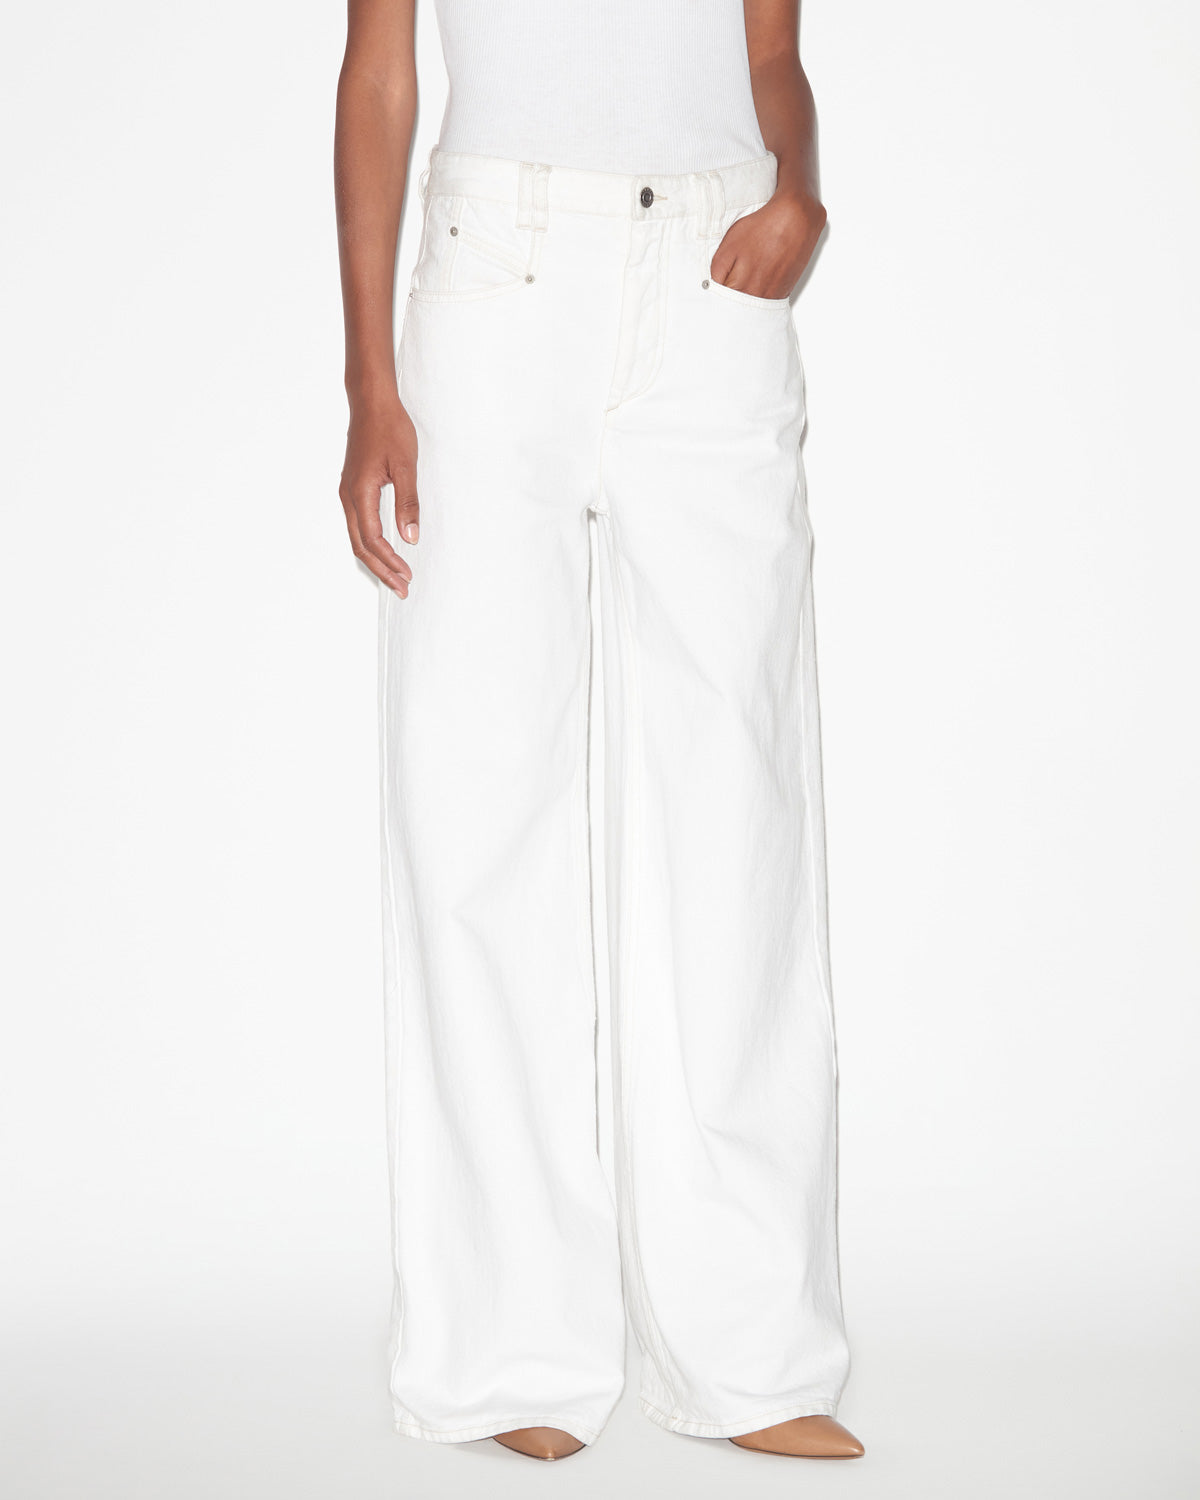 Pantaloni lemony Woman Bianco 5